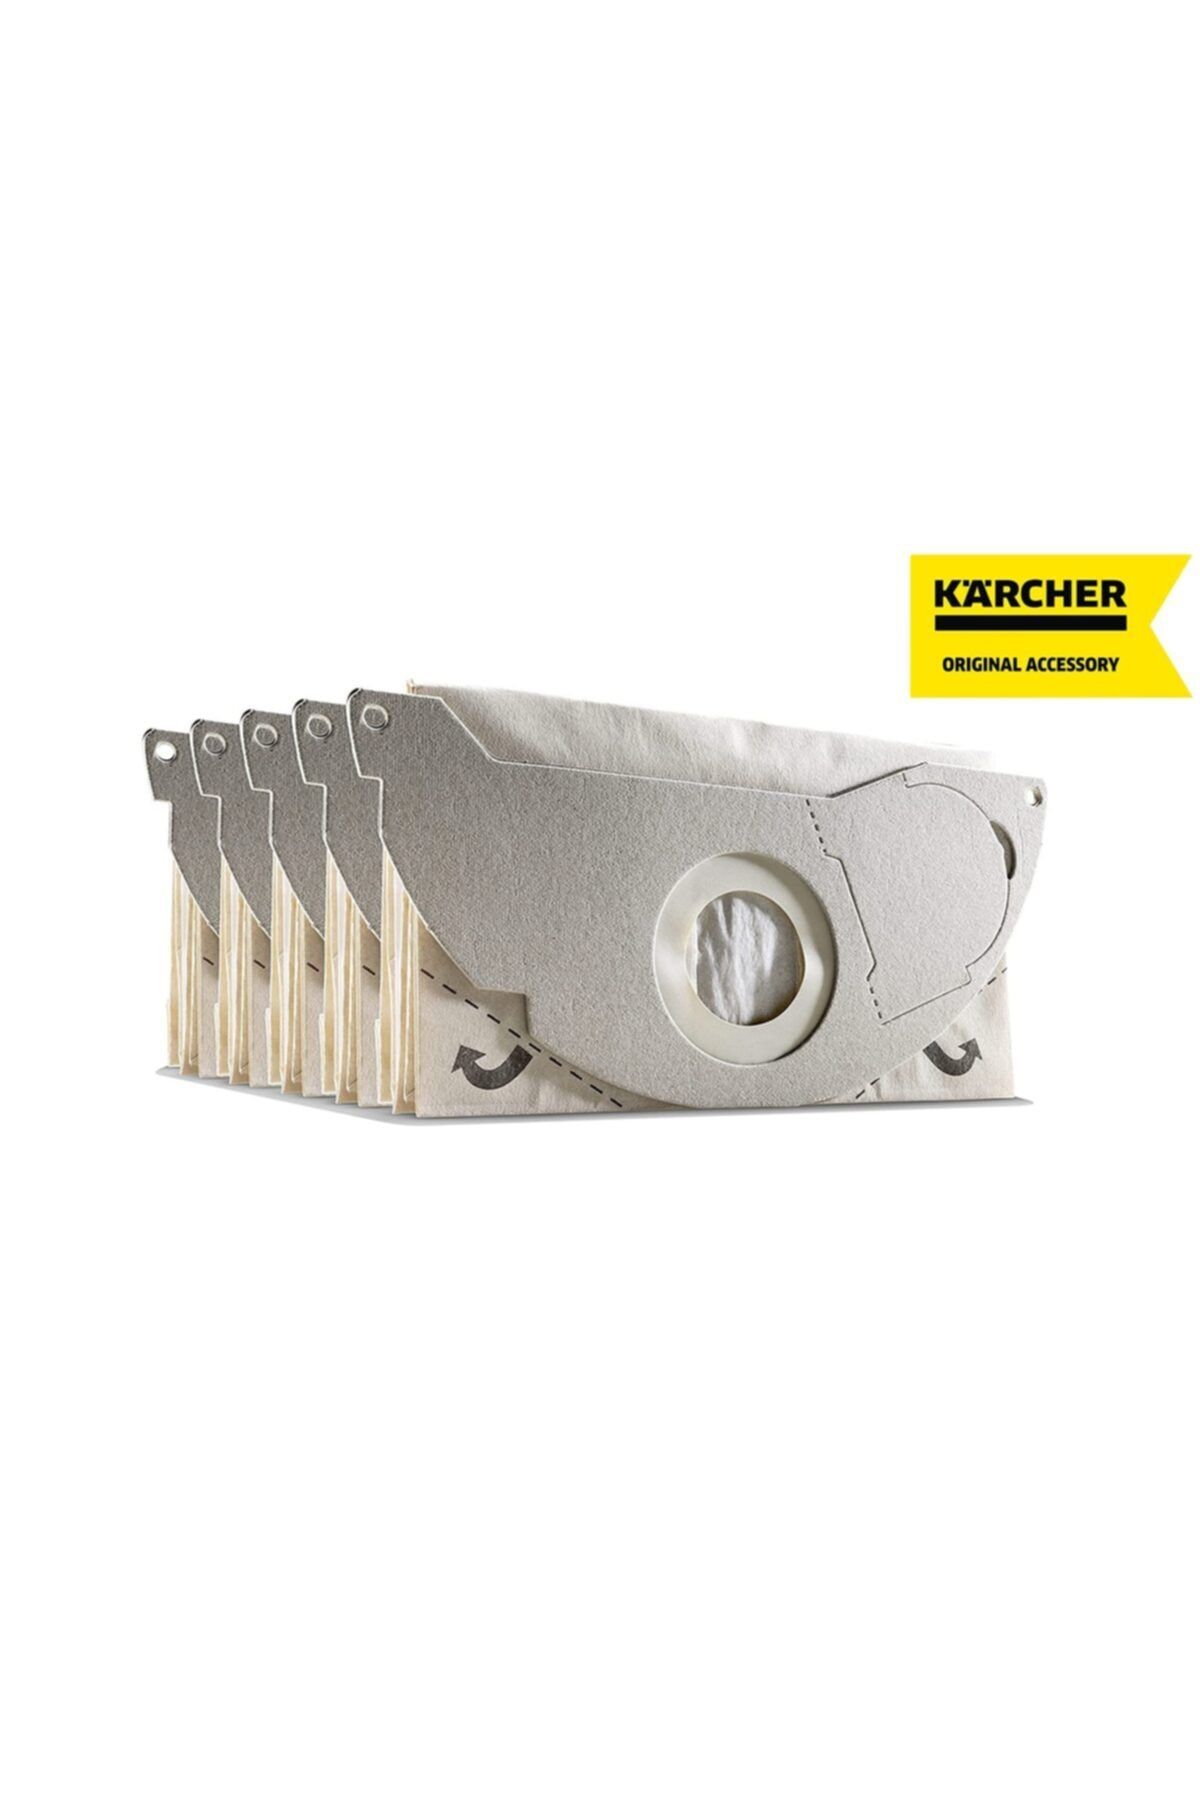 Karcher Wd 2 Premium - Se 5.100 - Se 6.100 Toz Torbası